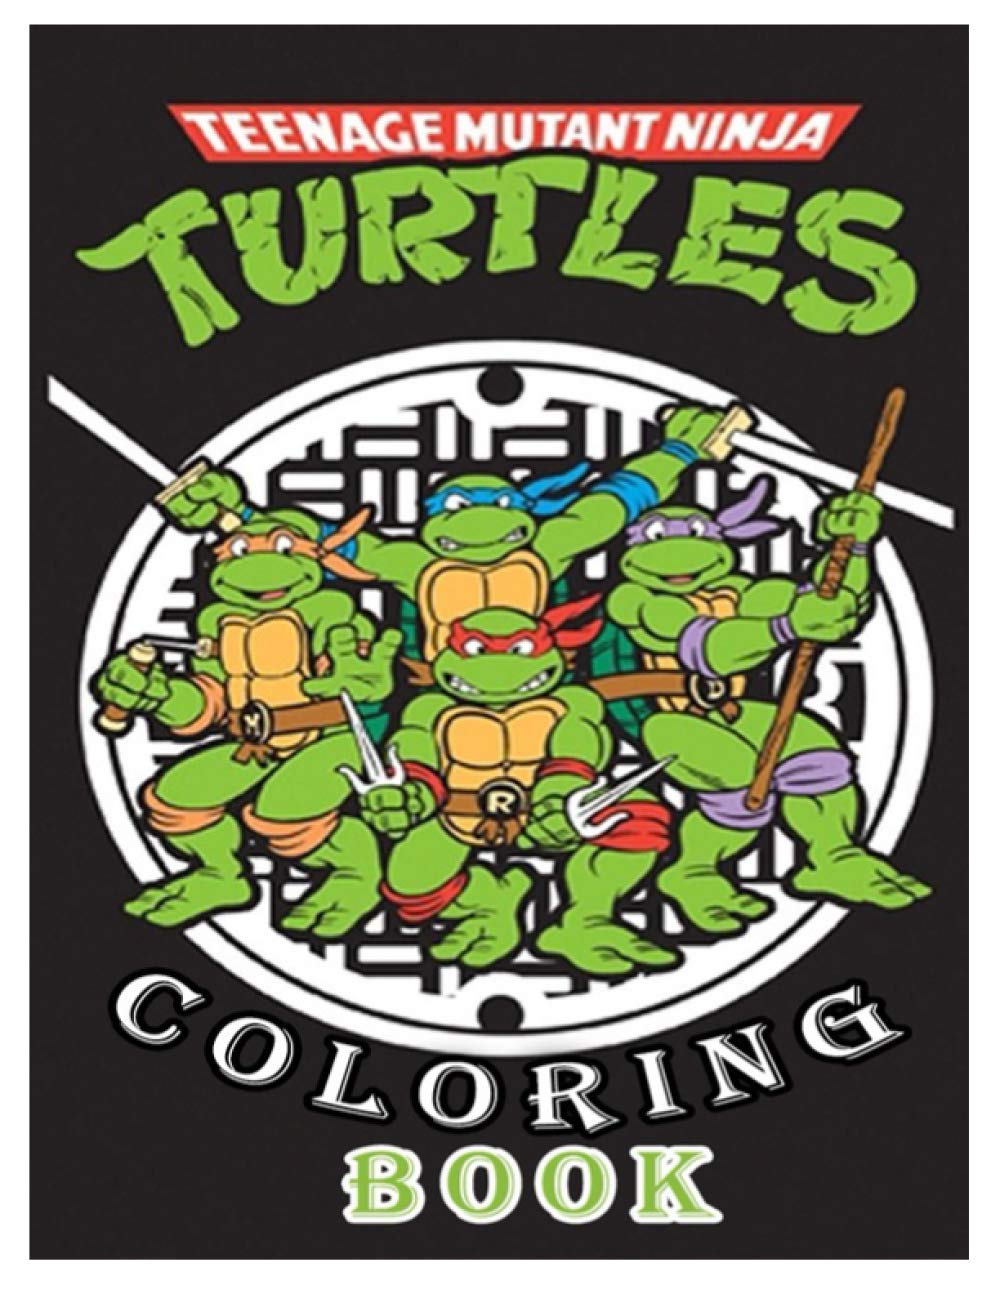 Teenage mutant ninja turtles coloring book for kids ages